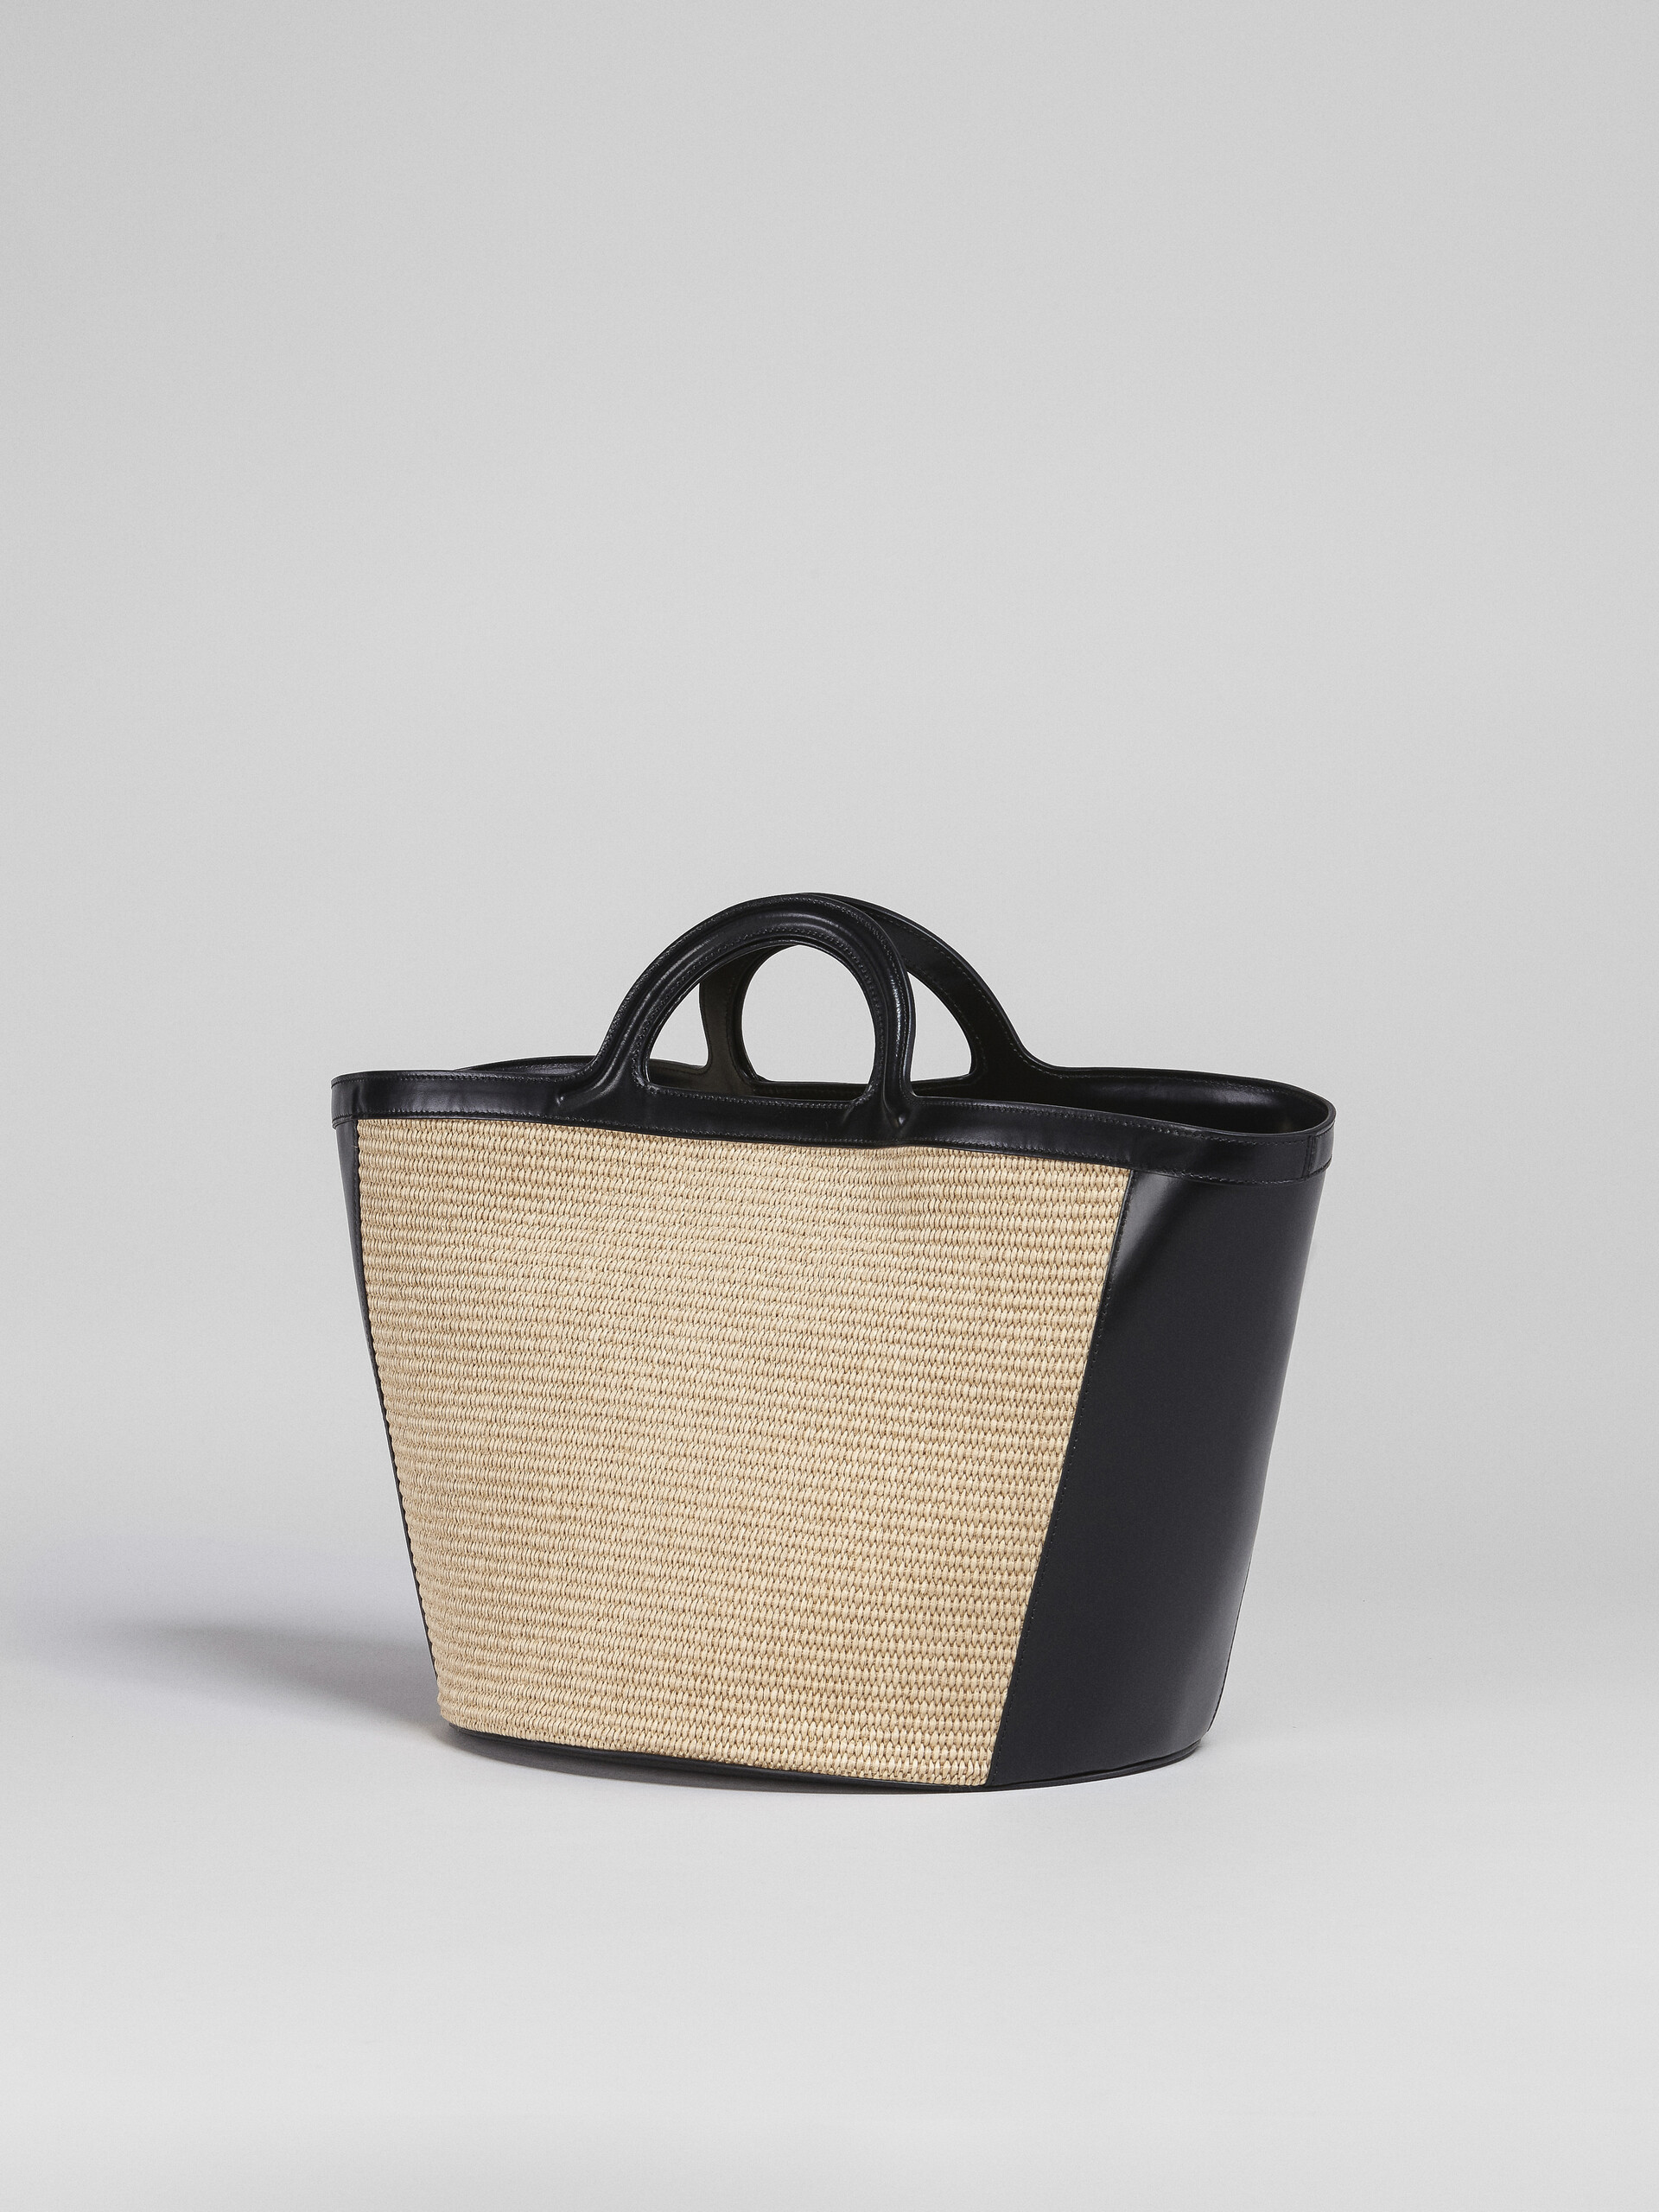 TROPICALIA large bag in black leather and raffia - Handbags - Image 3